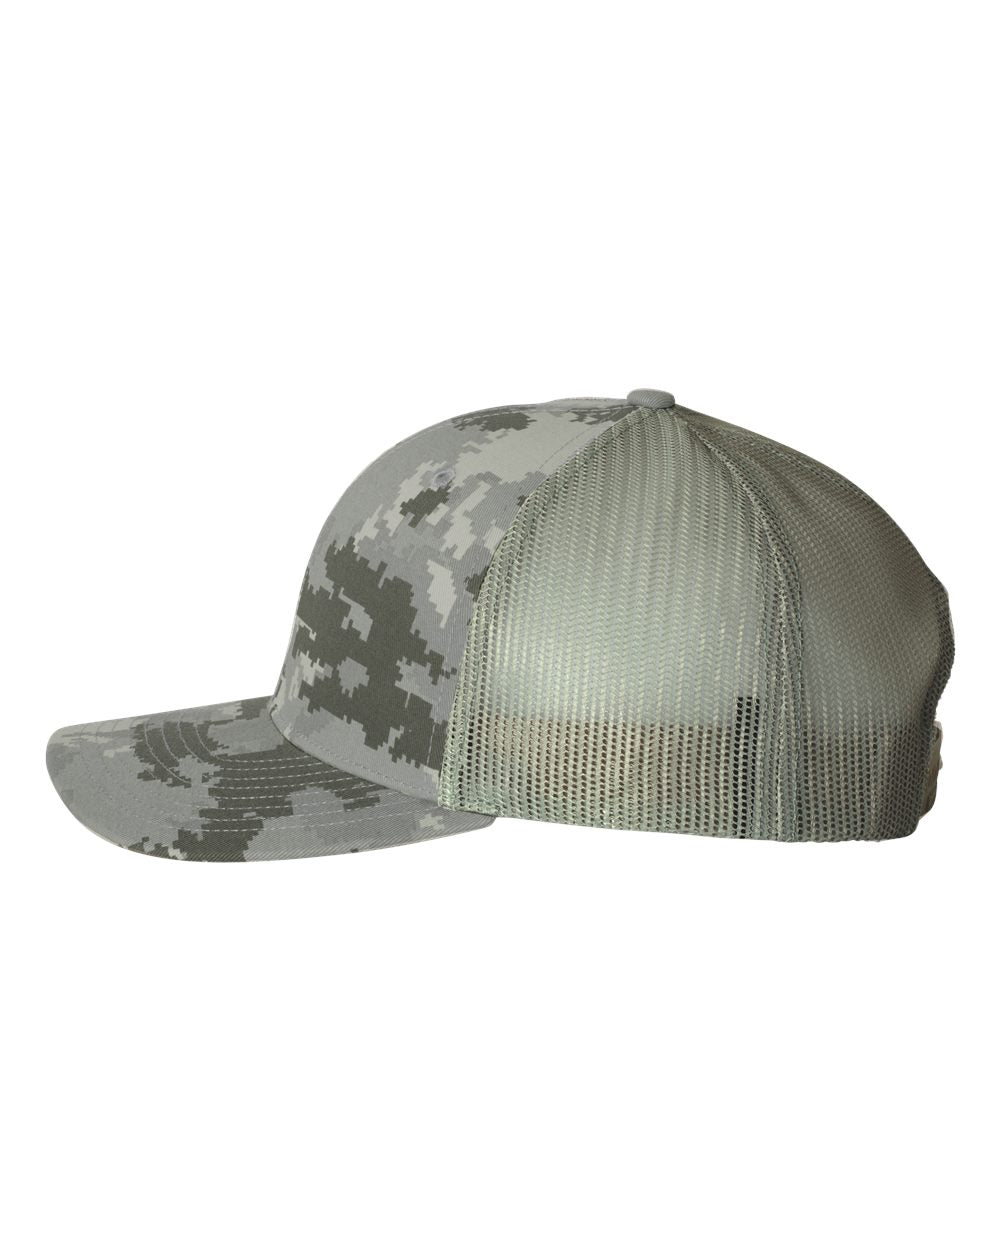 Memphis Grizzlies 3D Patterned Snapback Trucker Hat- Military Digital Camo - Ten Gallon Hat Co.